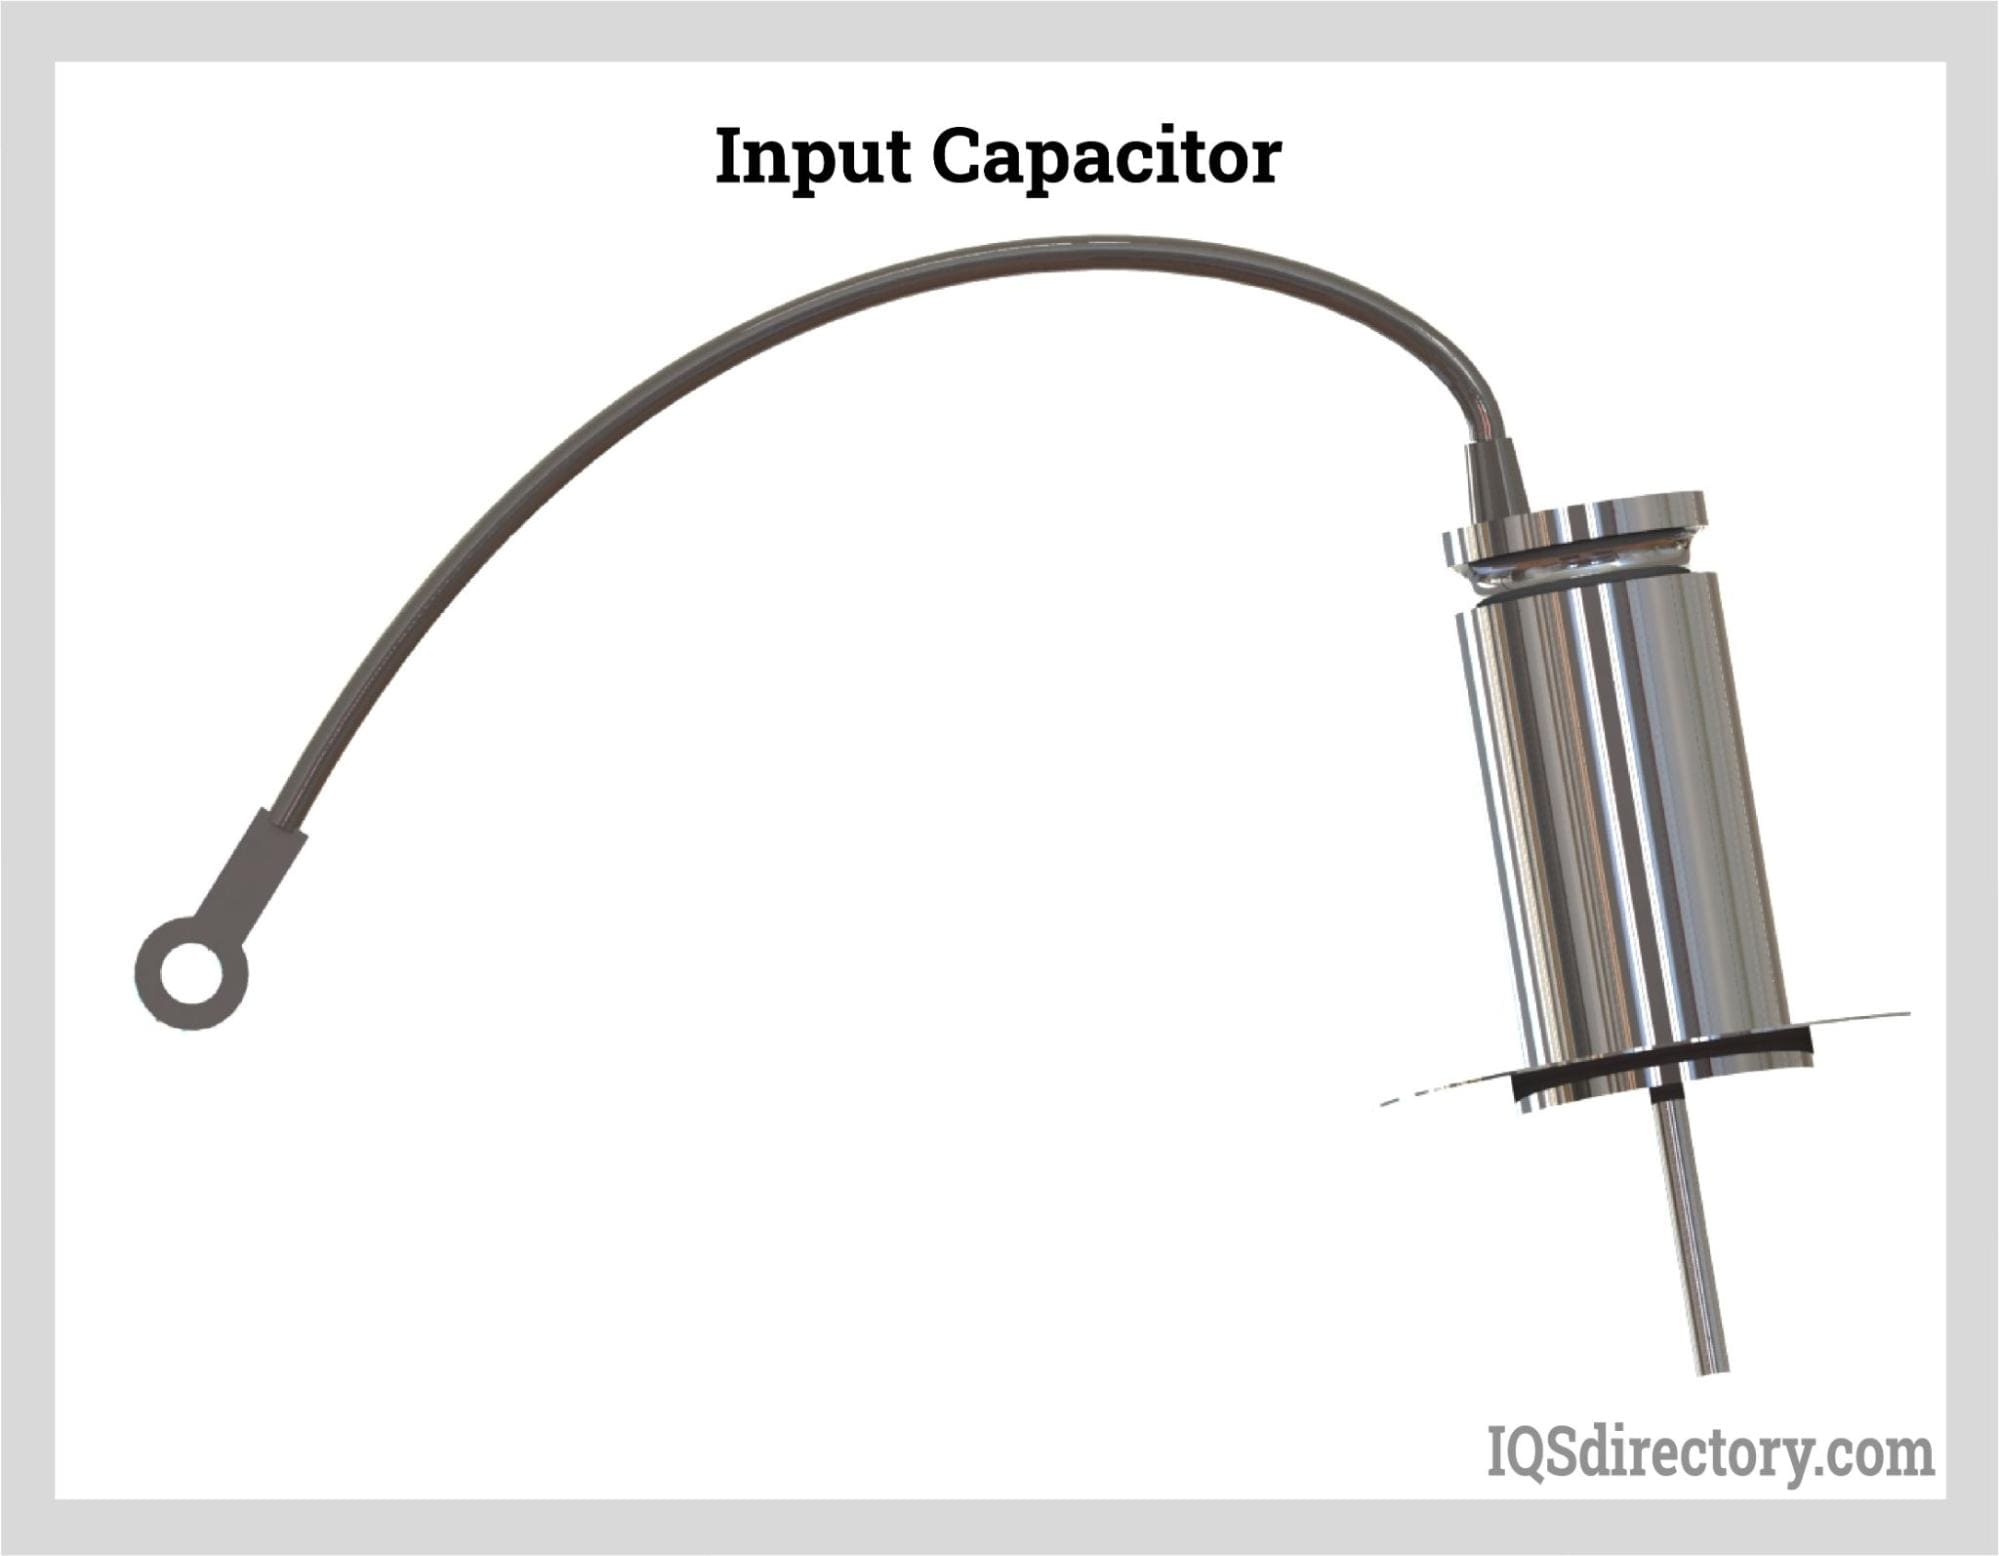 Input Capacitor